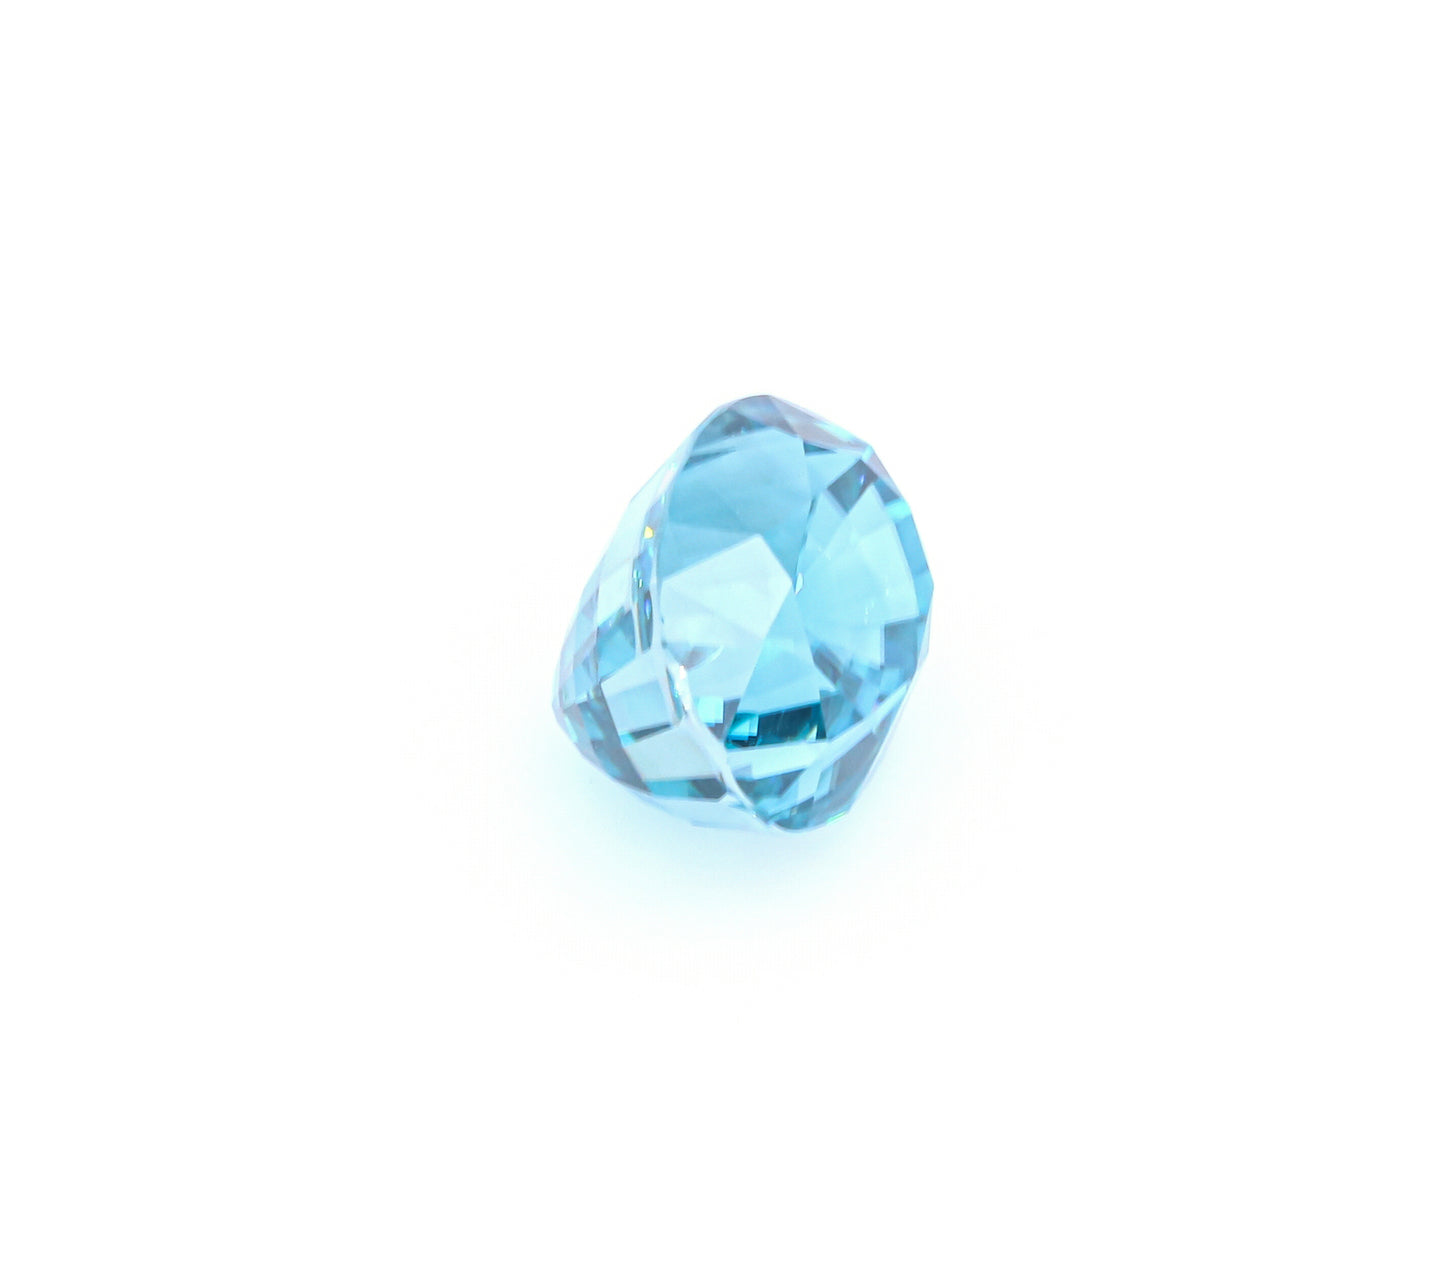 Natural Blue Zircon Oval Shape 17.33 Carats